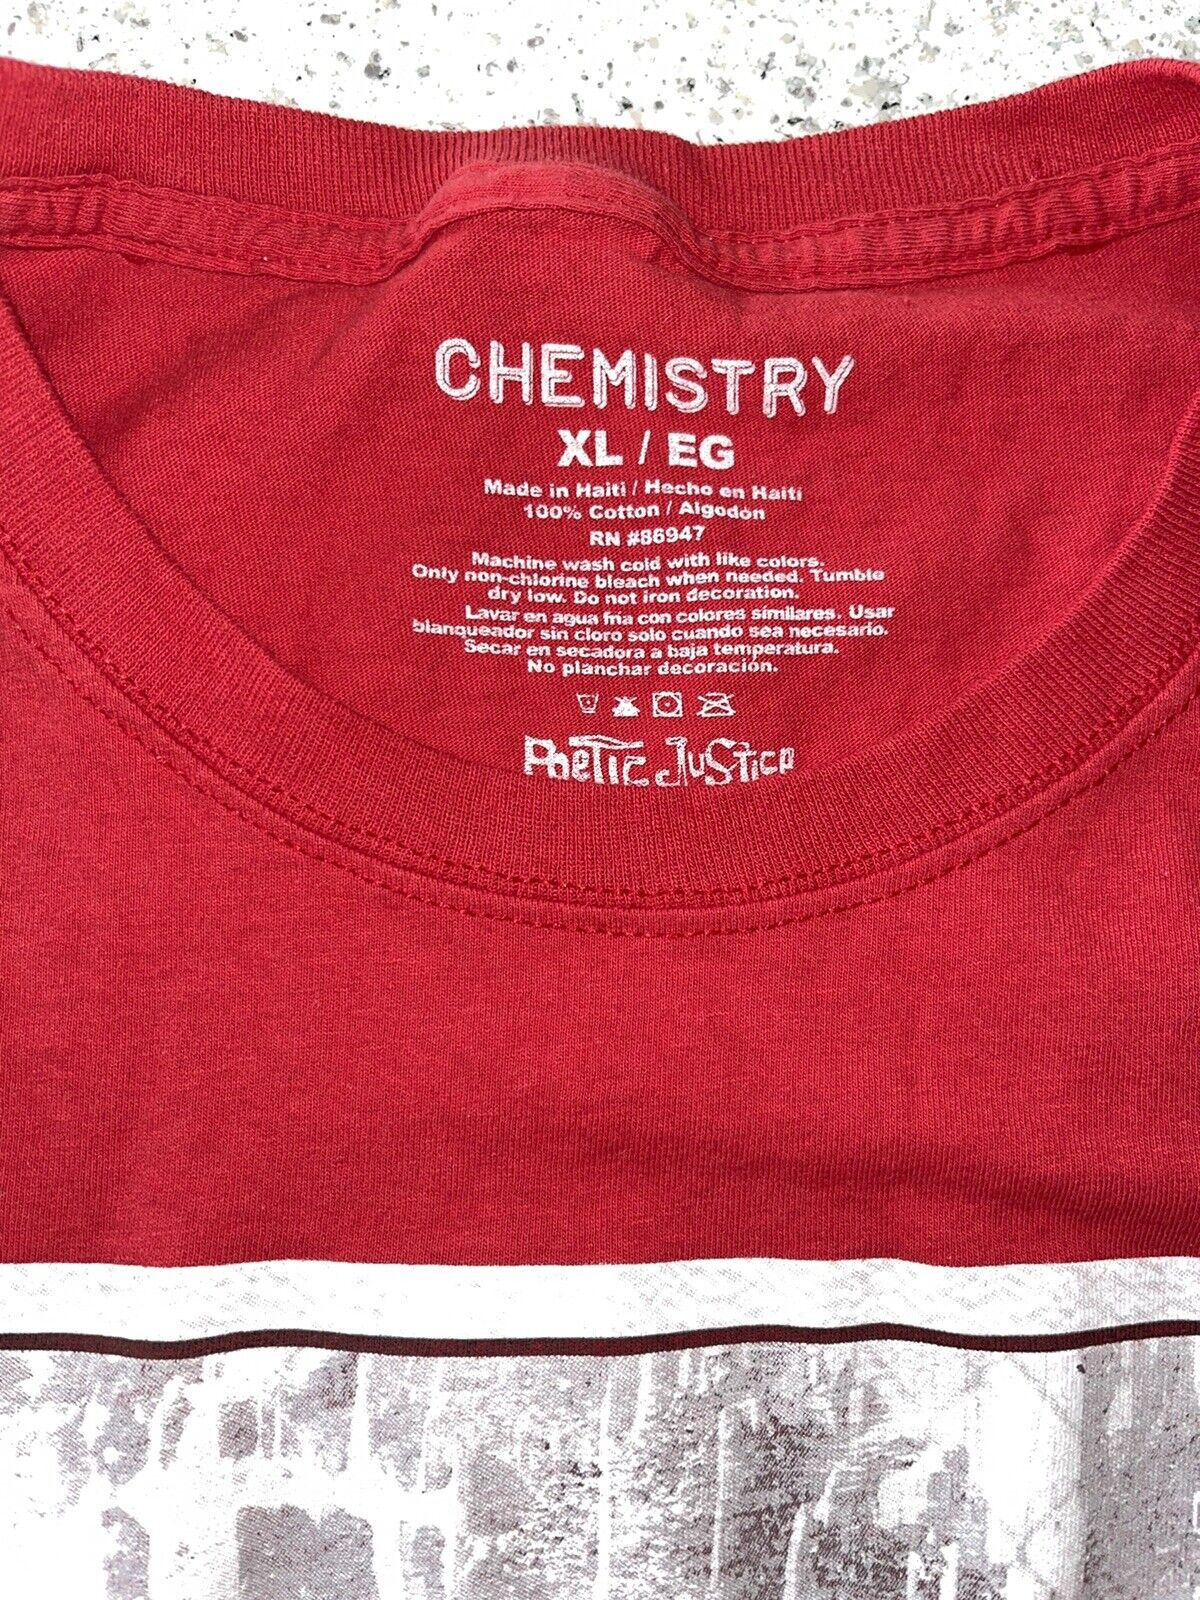 Vintage Poetic Justice Tupac T-Shirt - XL - image 2